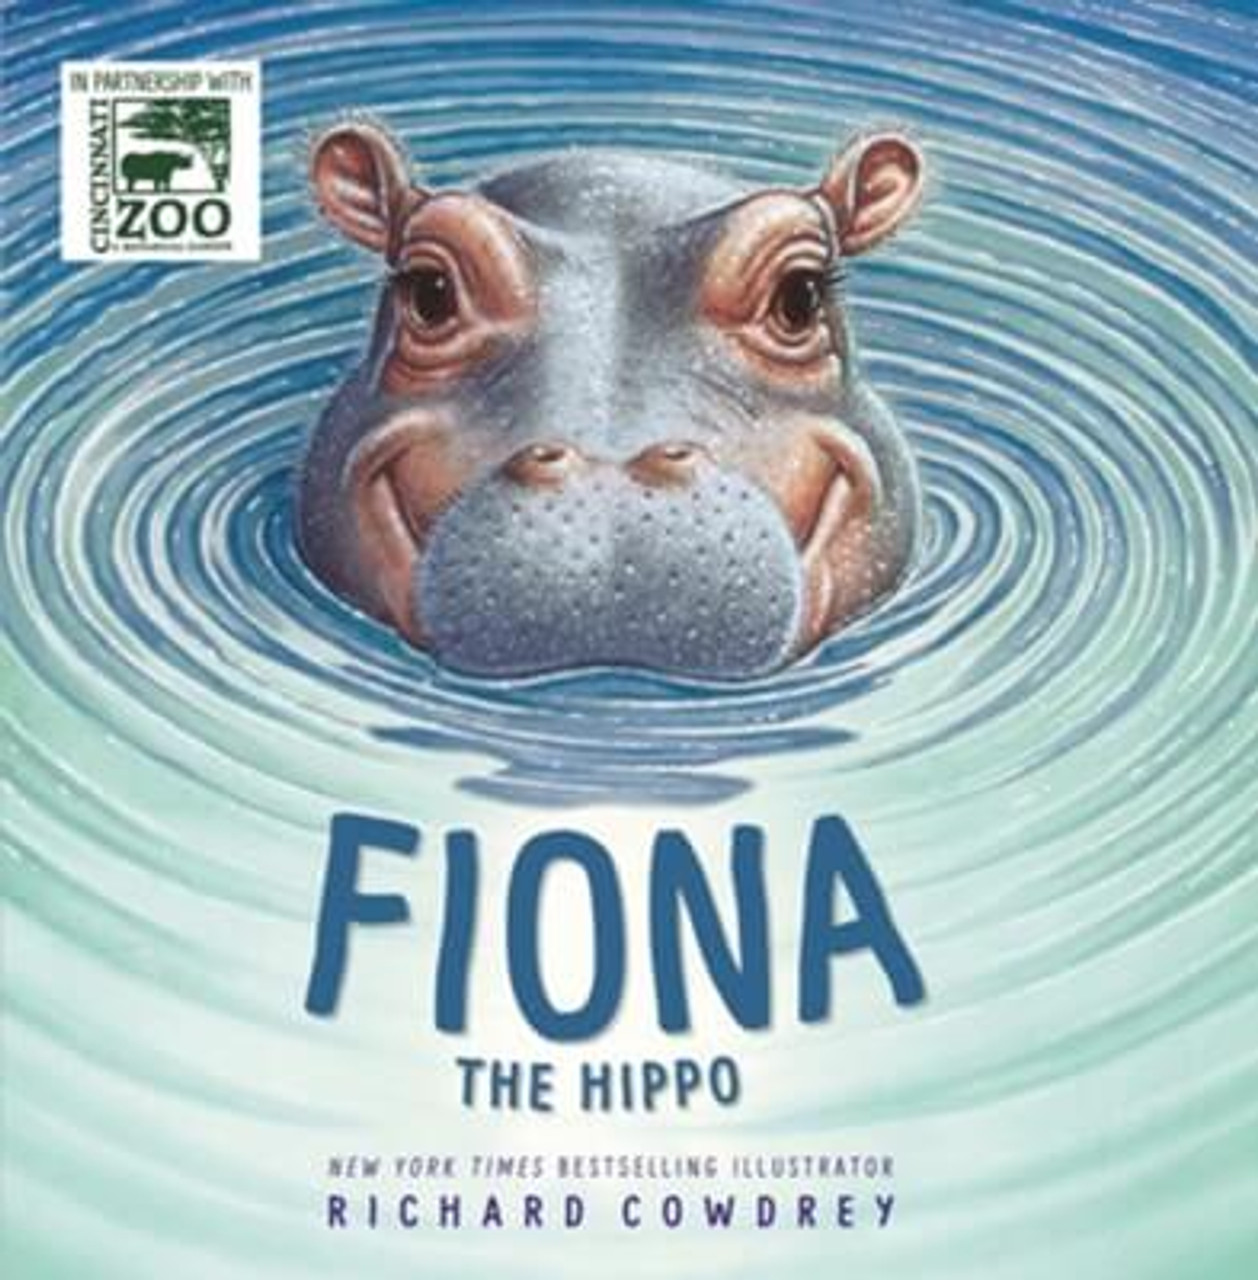 Fiona the Hippo hardcover book